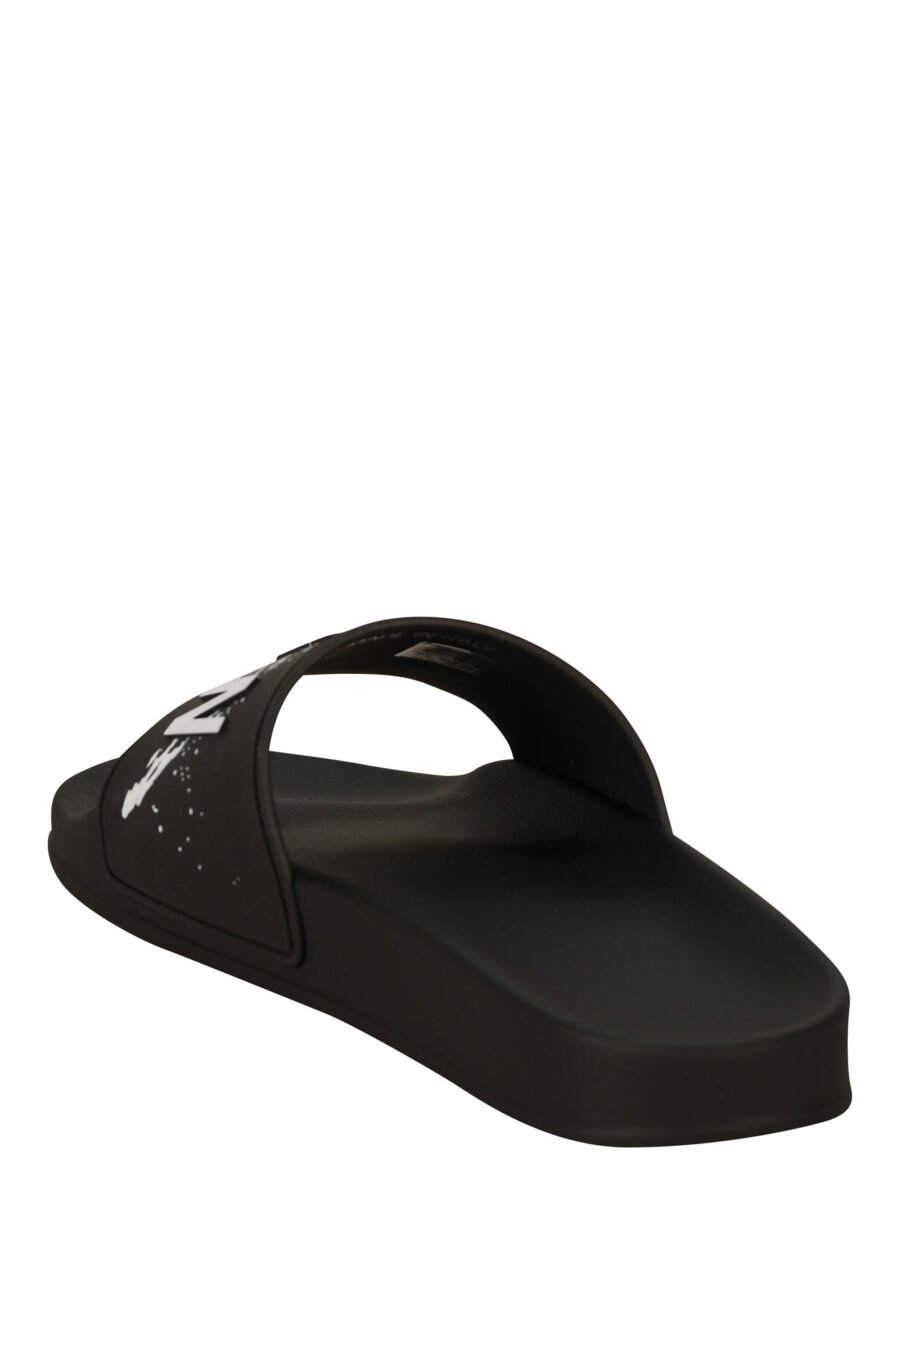 Black rubber flip flops with "icon splash" logo - 8055777295236 3